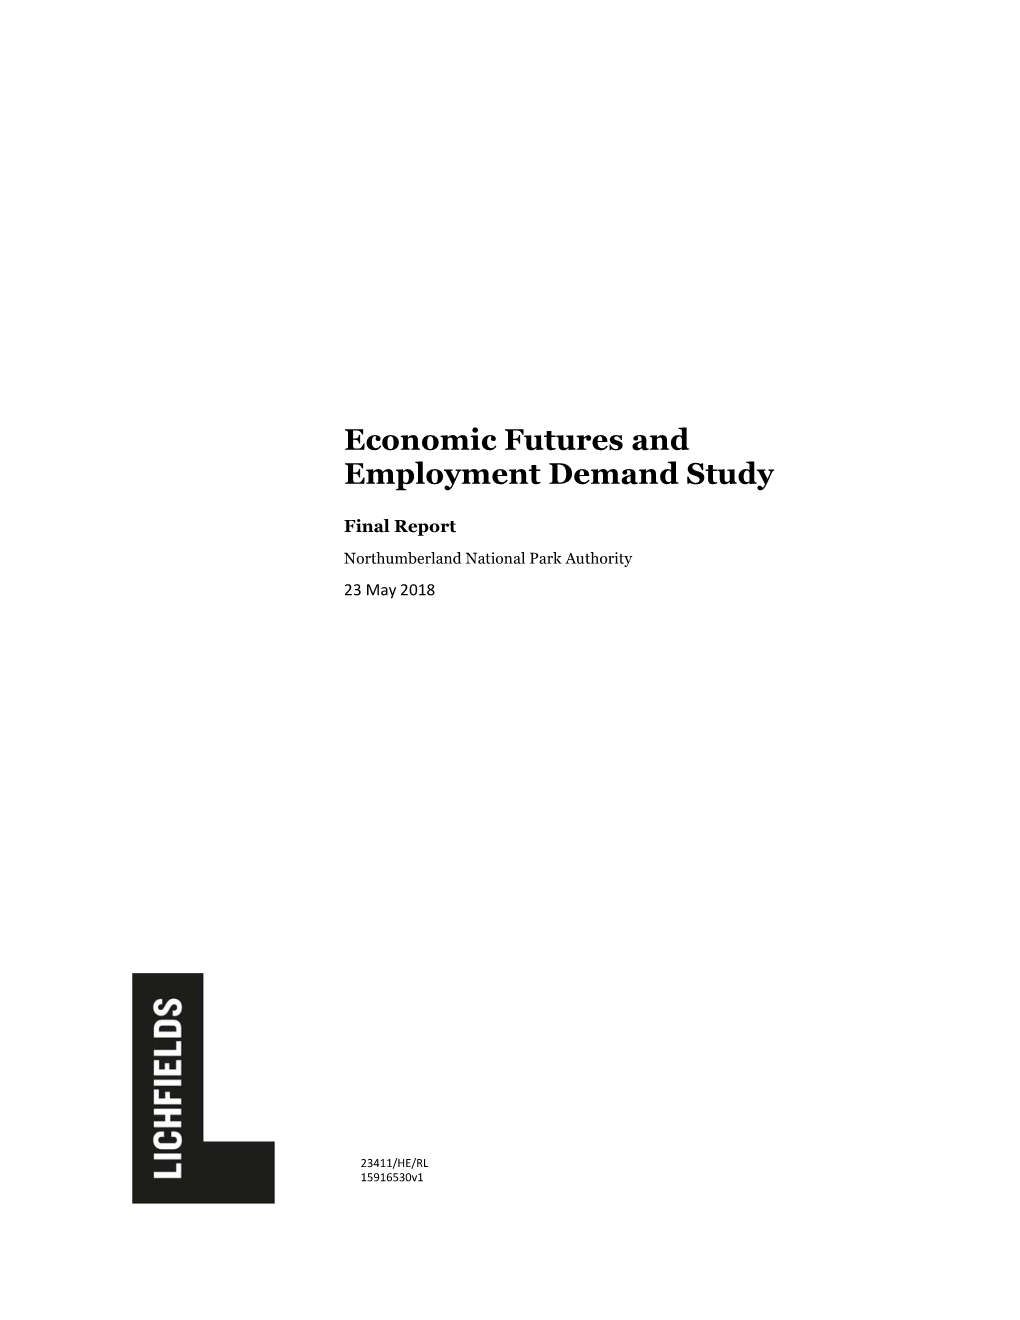 Economic Futures and Employment Demand Study 2018